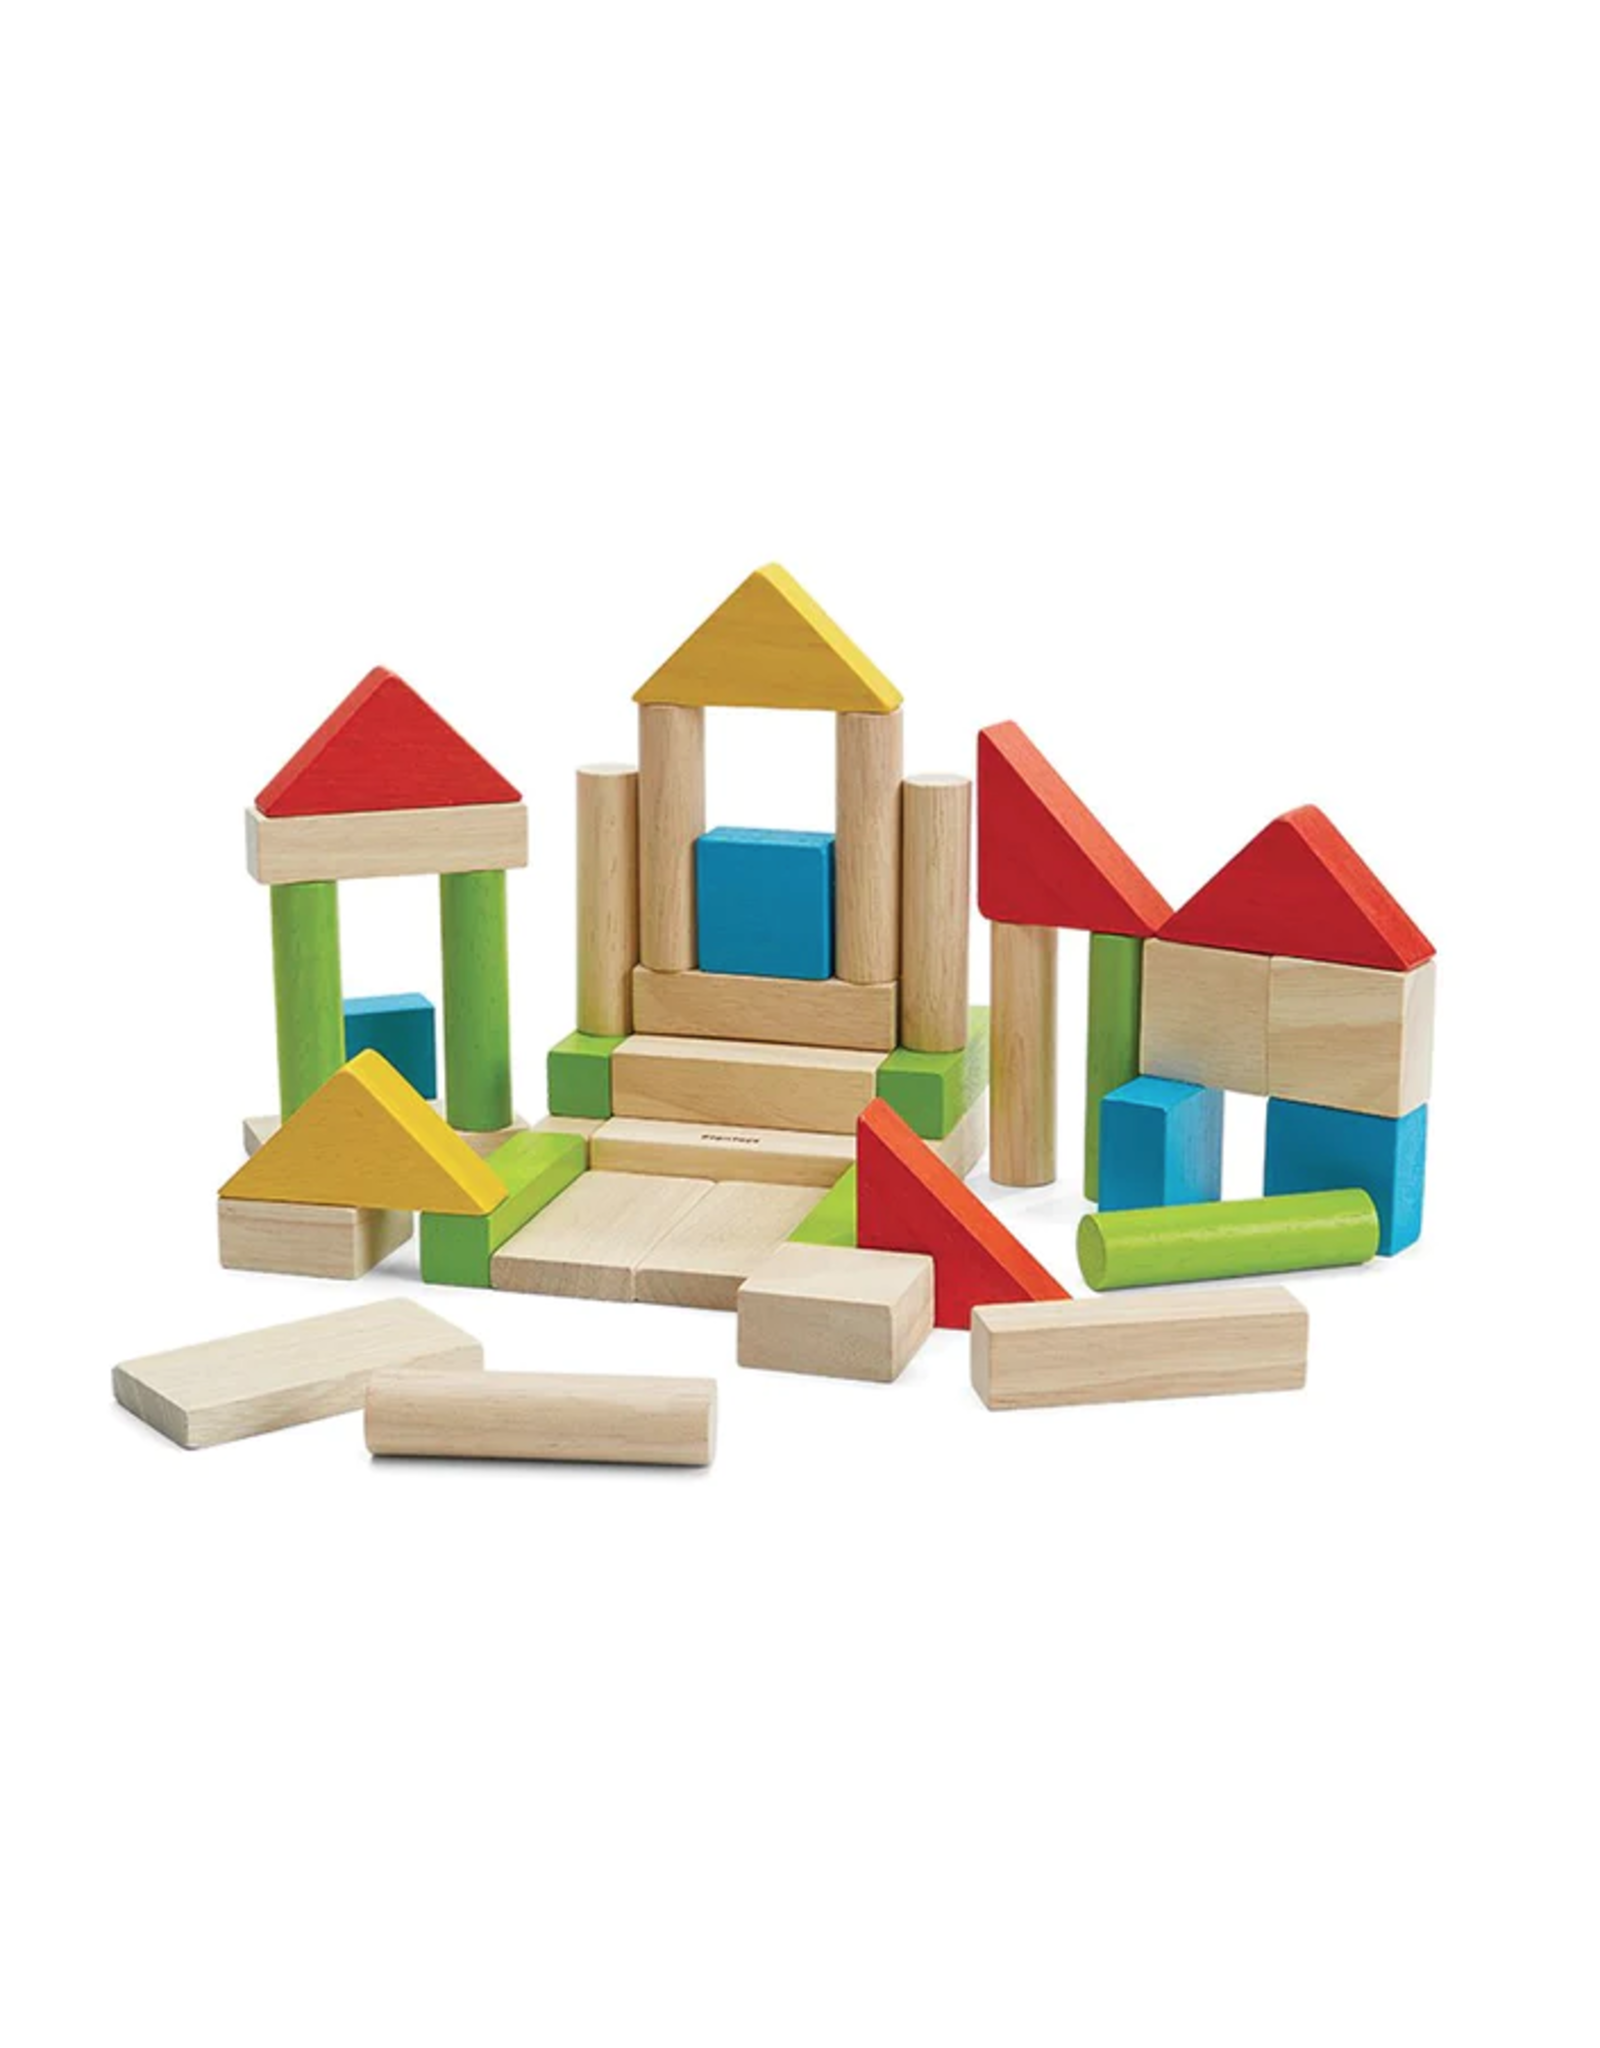 Plan Toys Colorful Blocks 40 Pieces